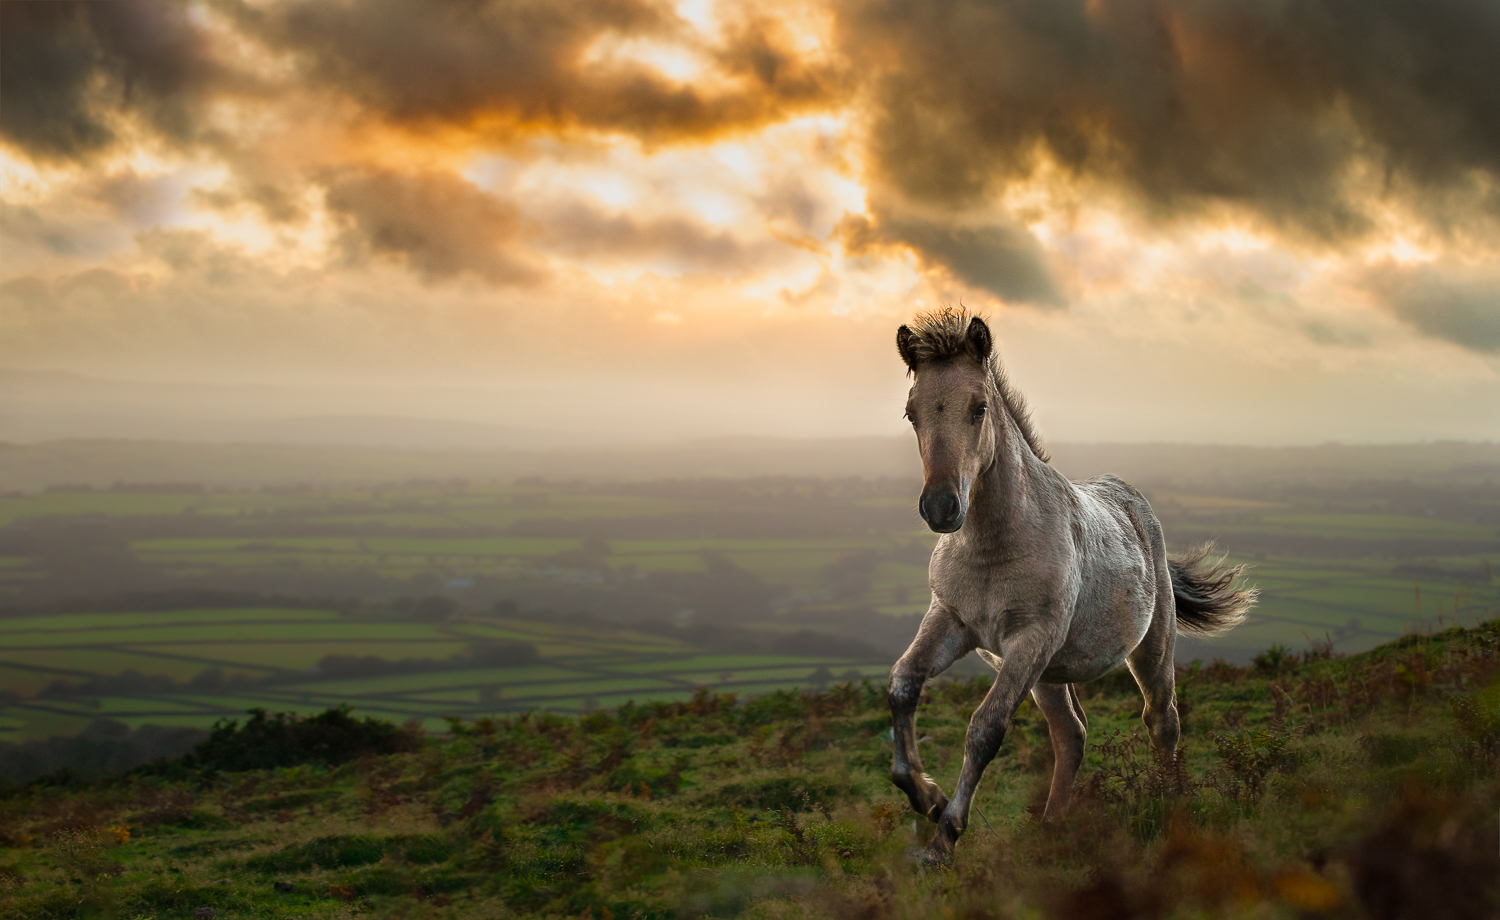 The Horseman’s Dream and Dartmoor